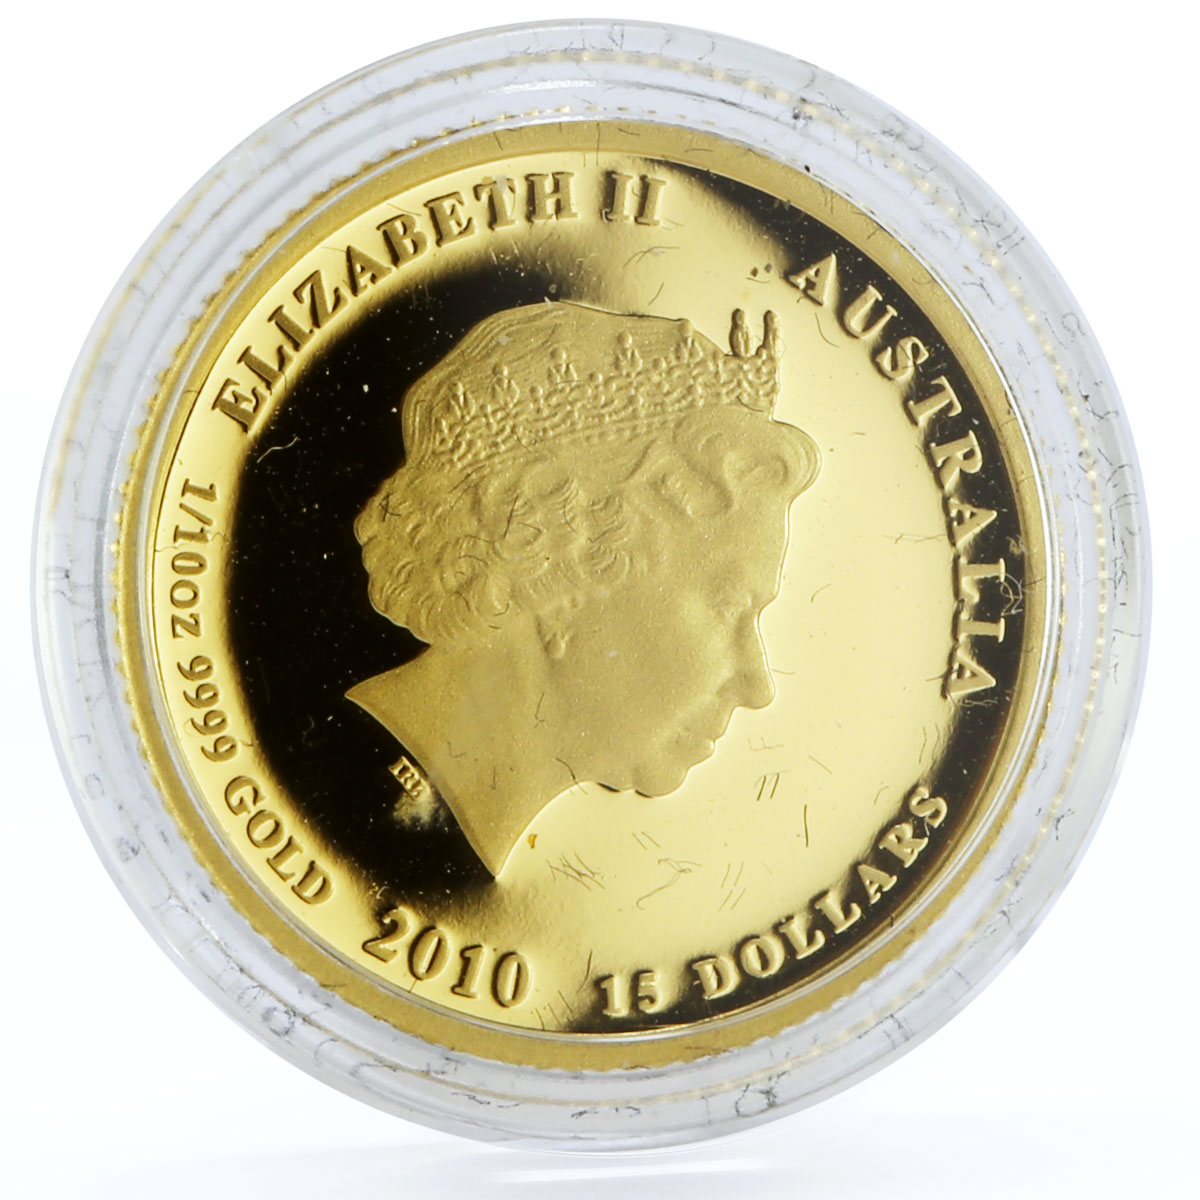 Australia 15 dollars Lunar Calendar series II Year of the Tiger gold coin 2010